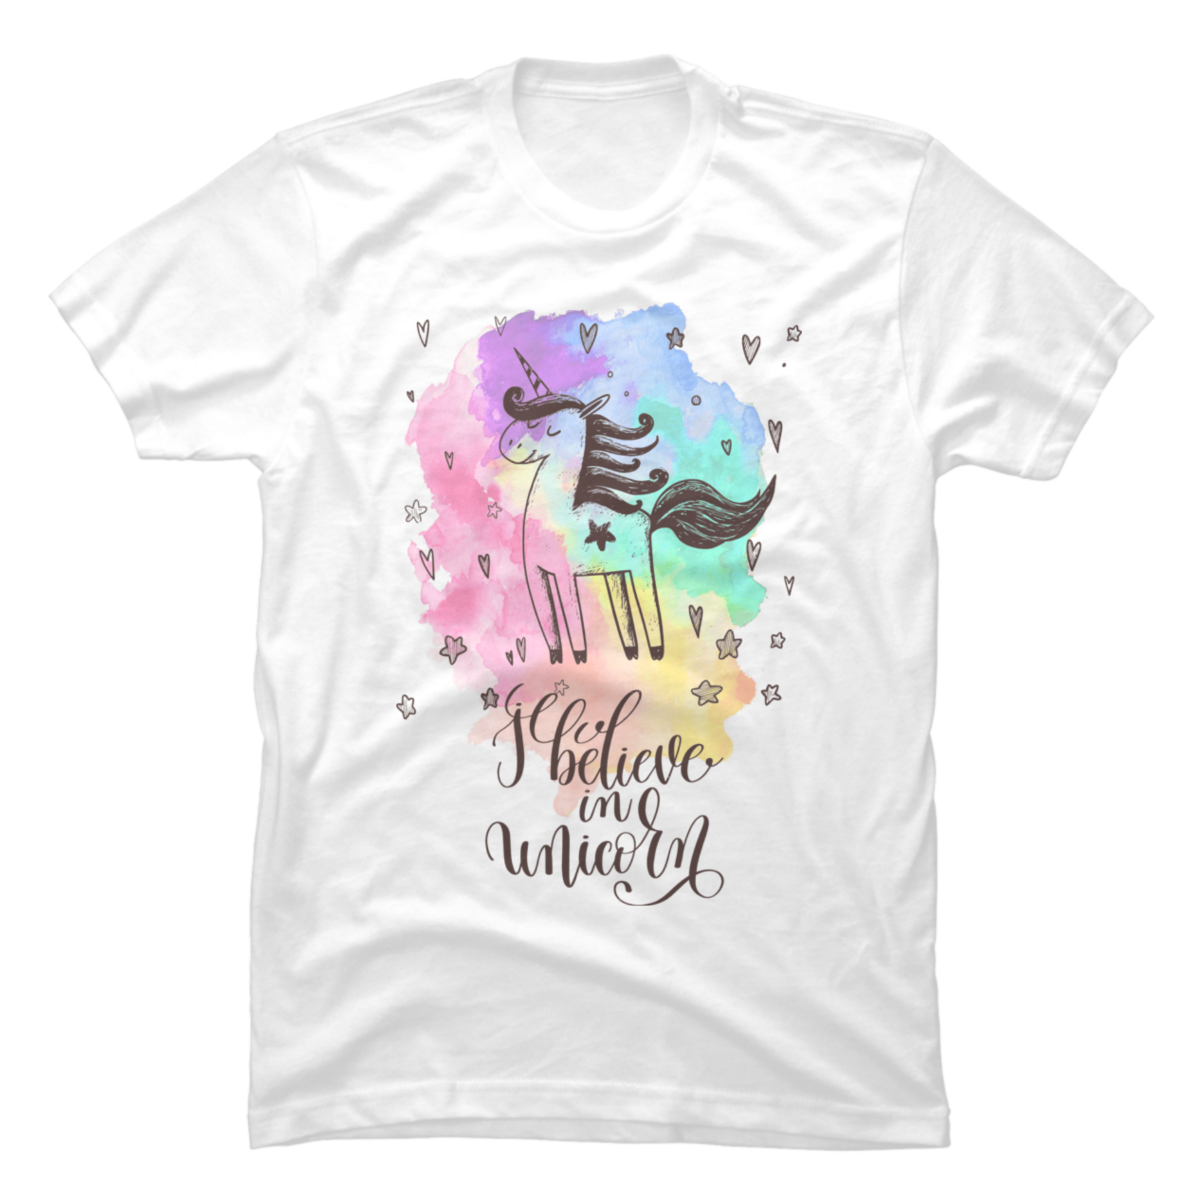 i believe in unicorns shirt